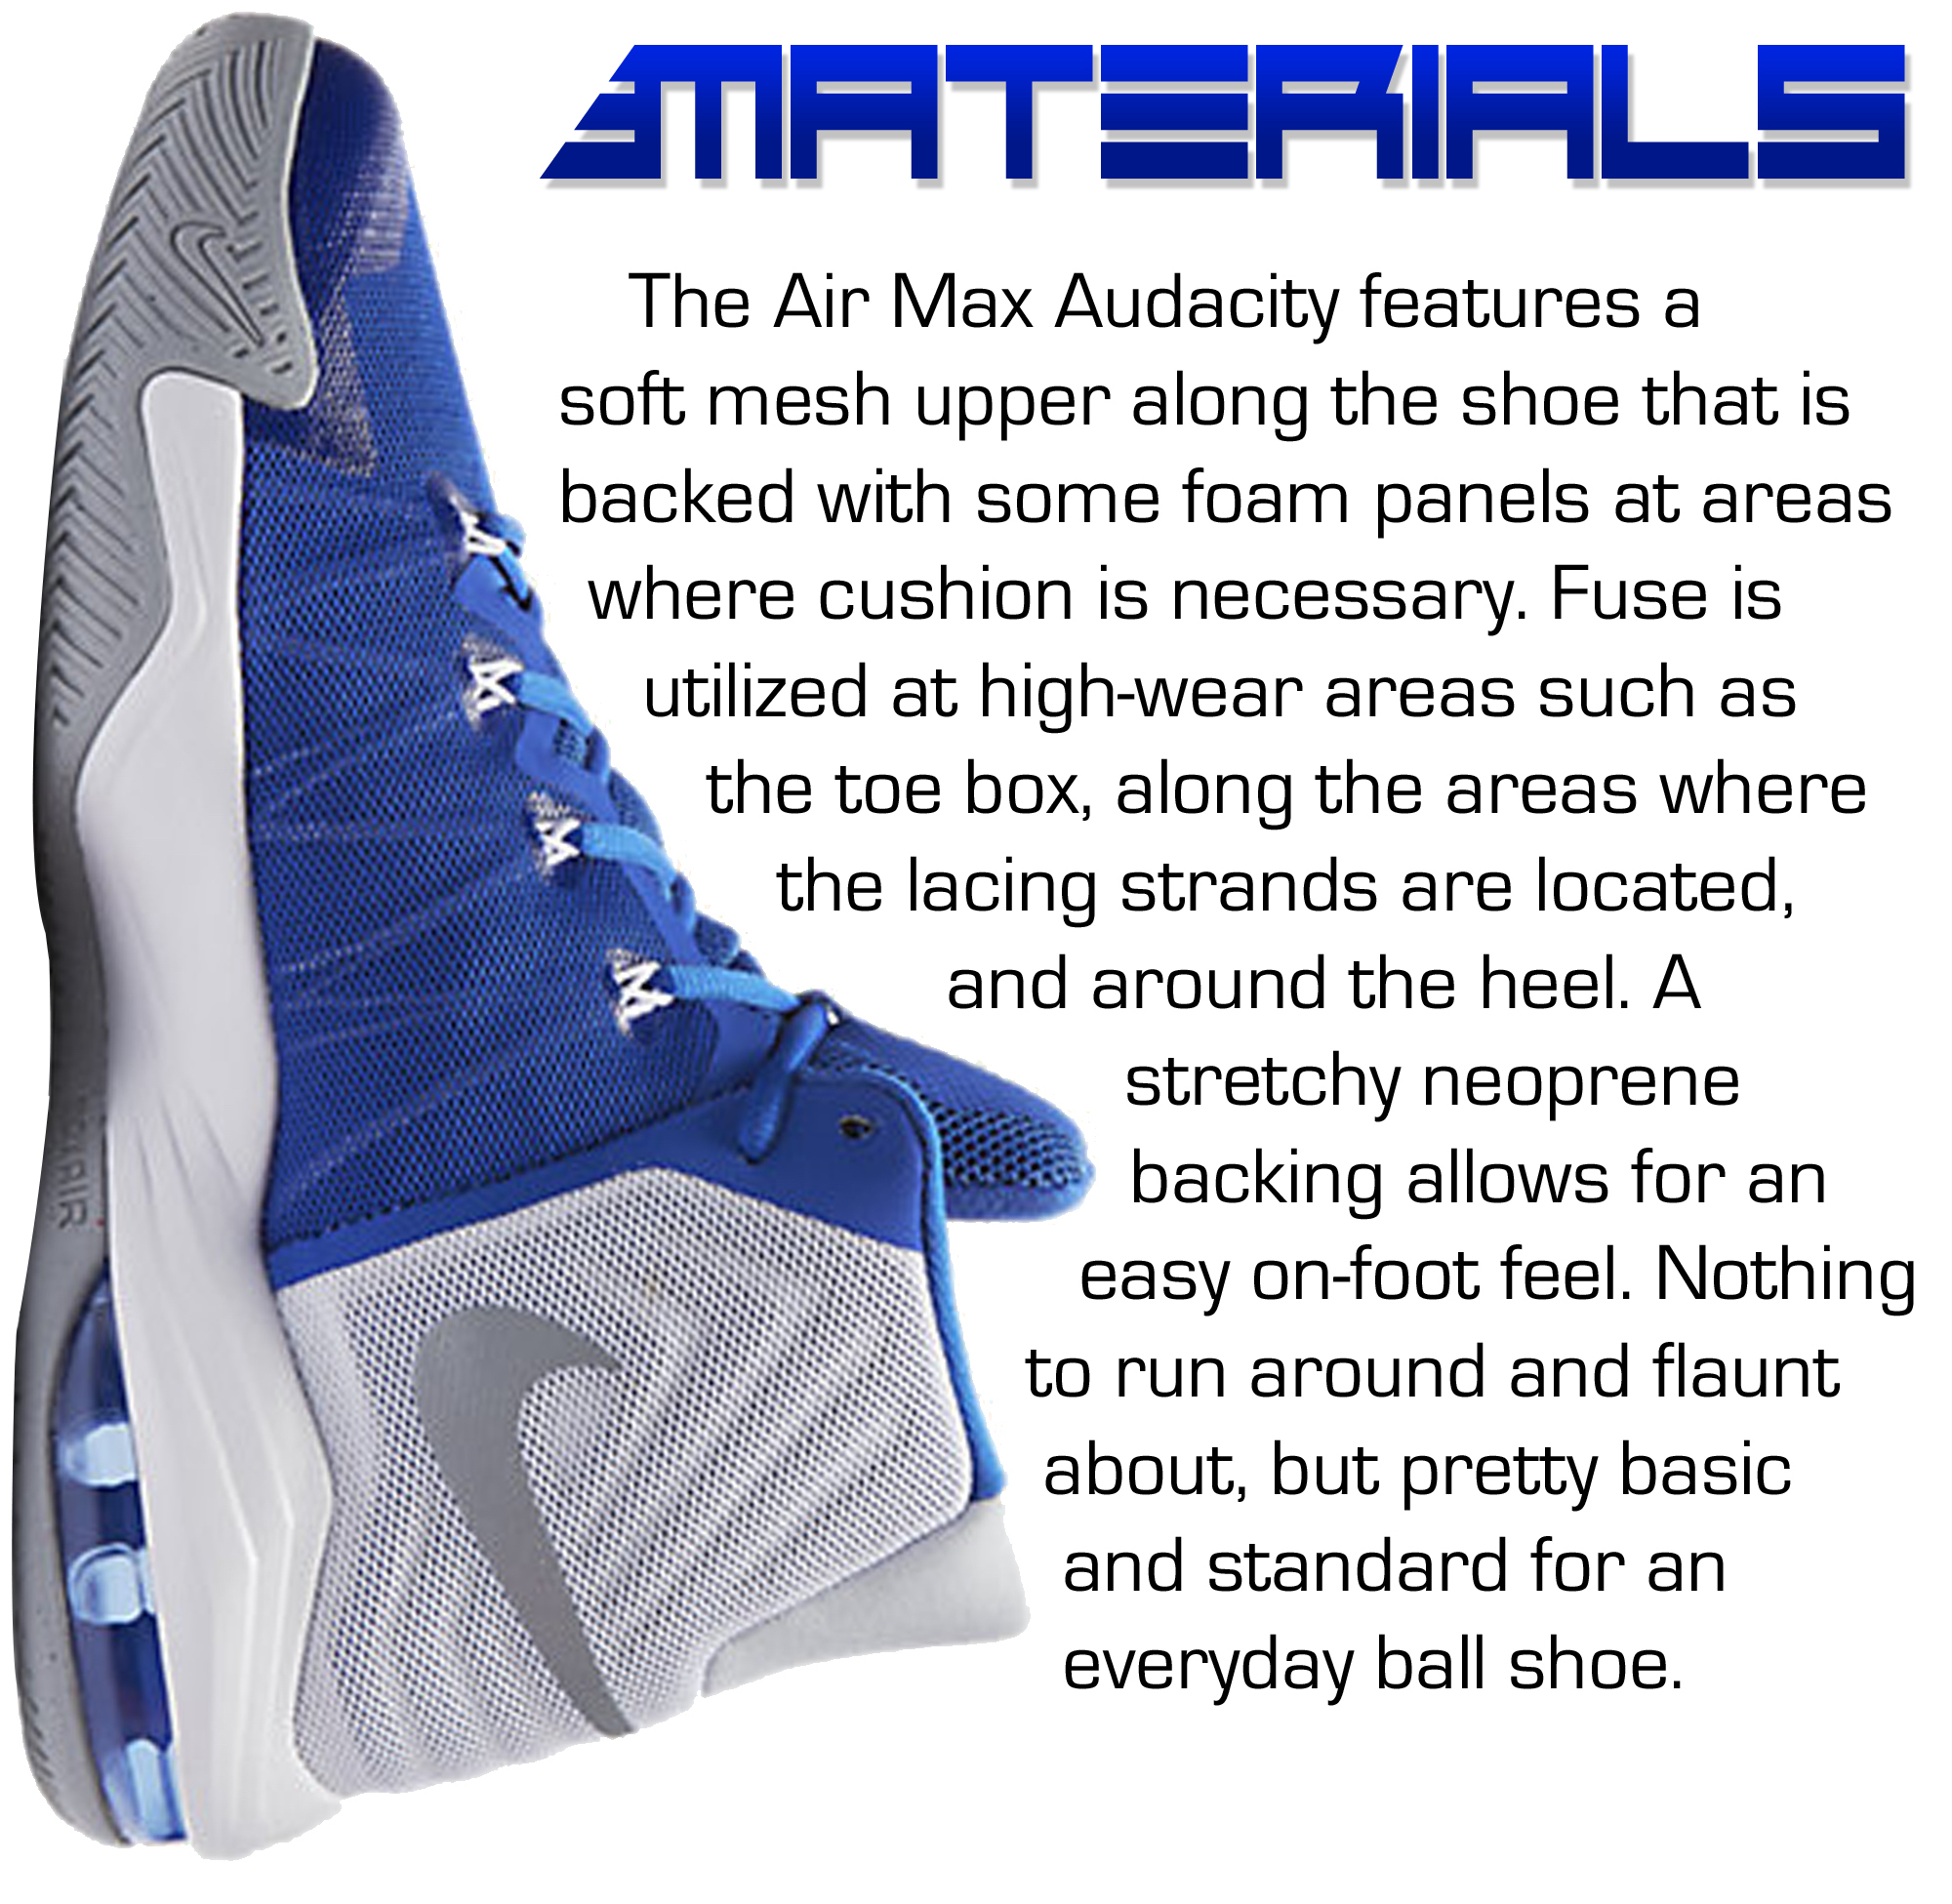 Nike Air Max Audacity - Materials